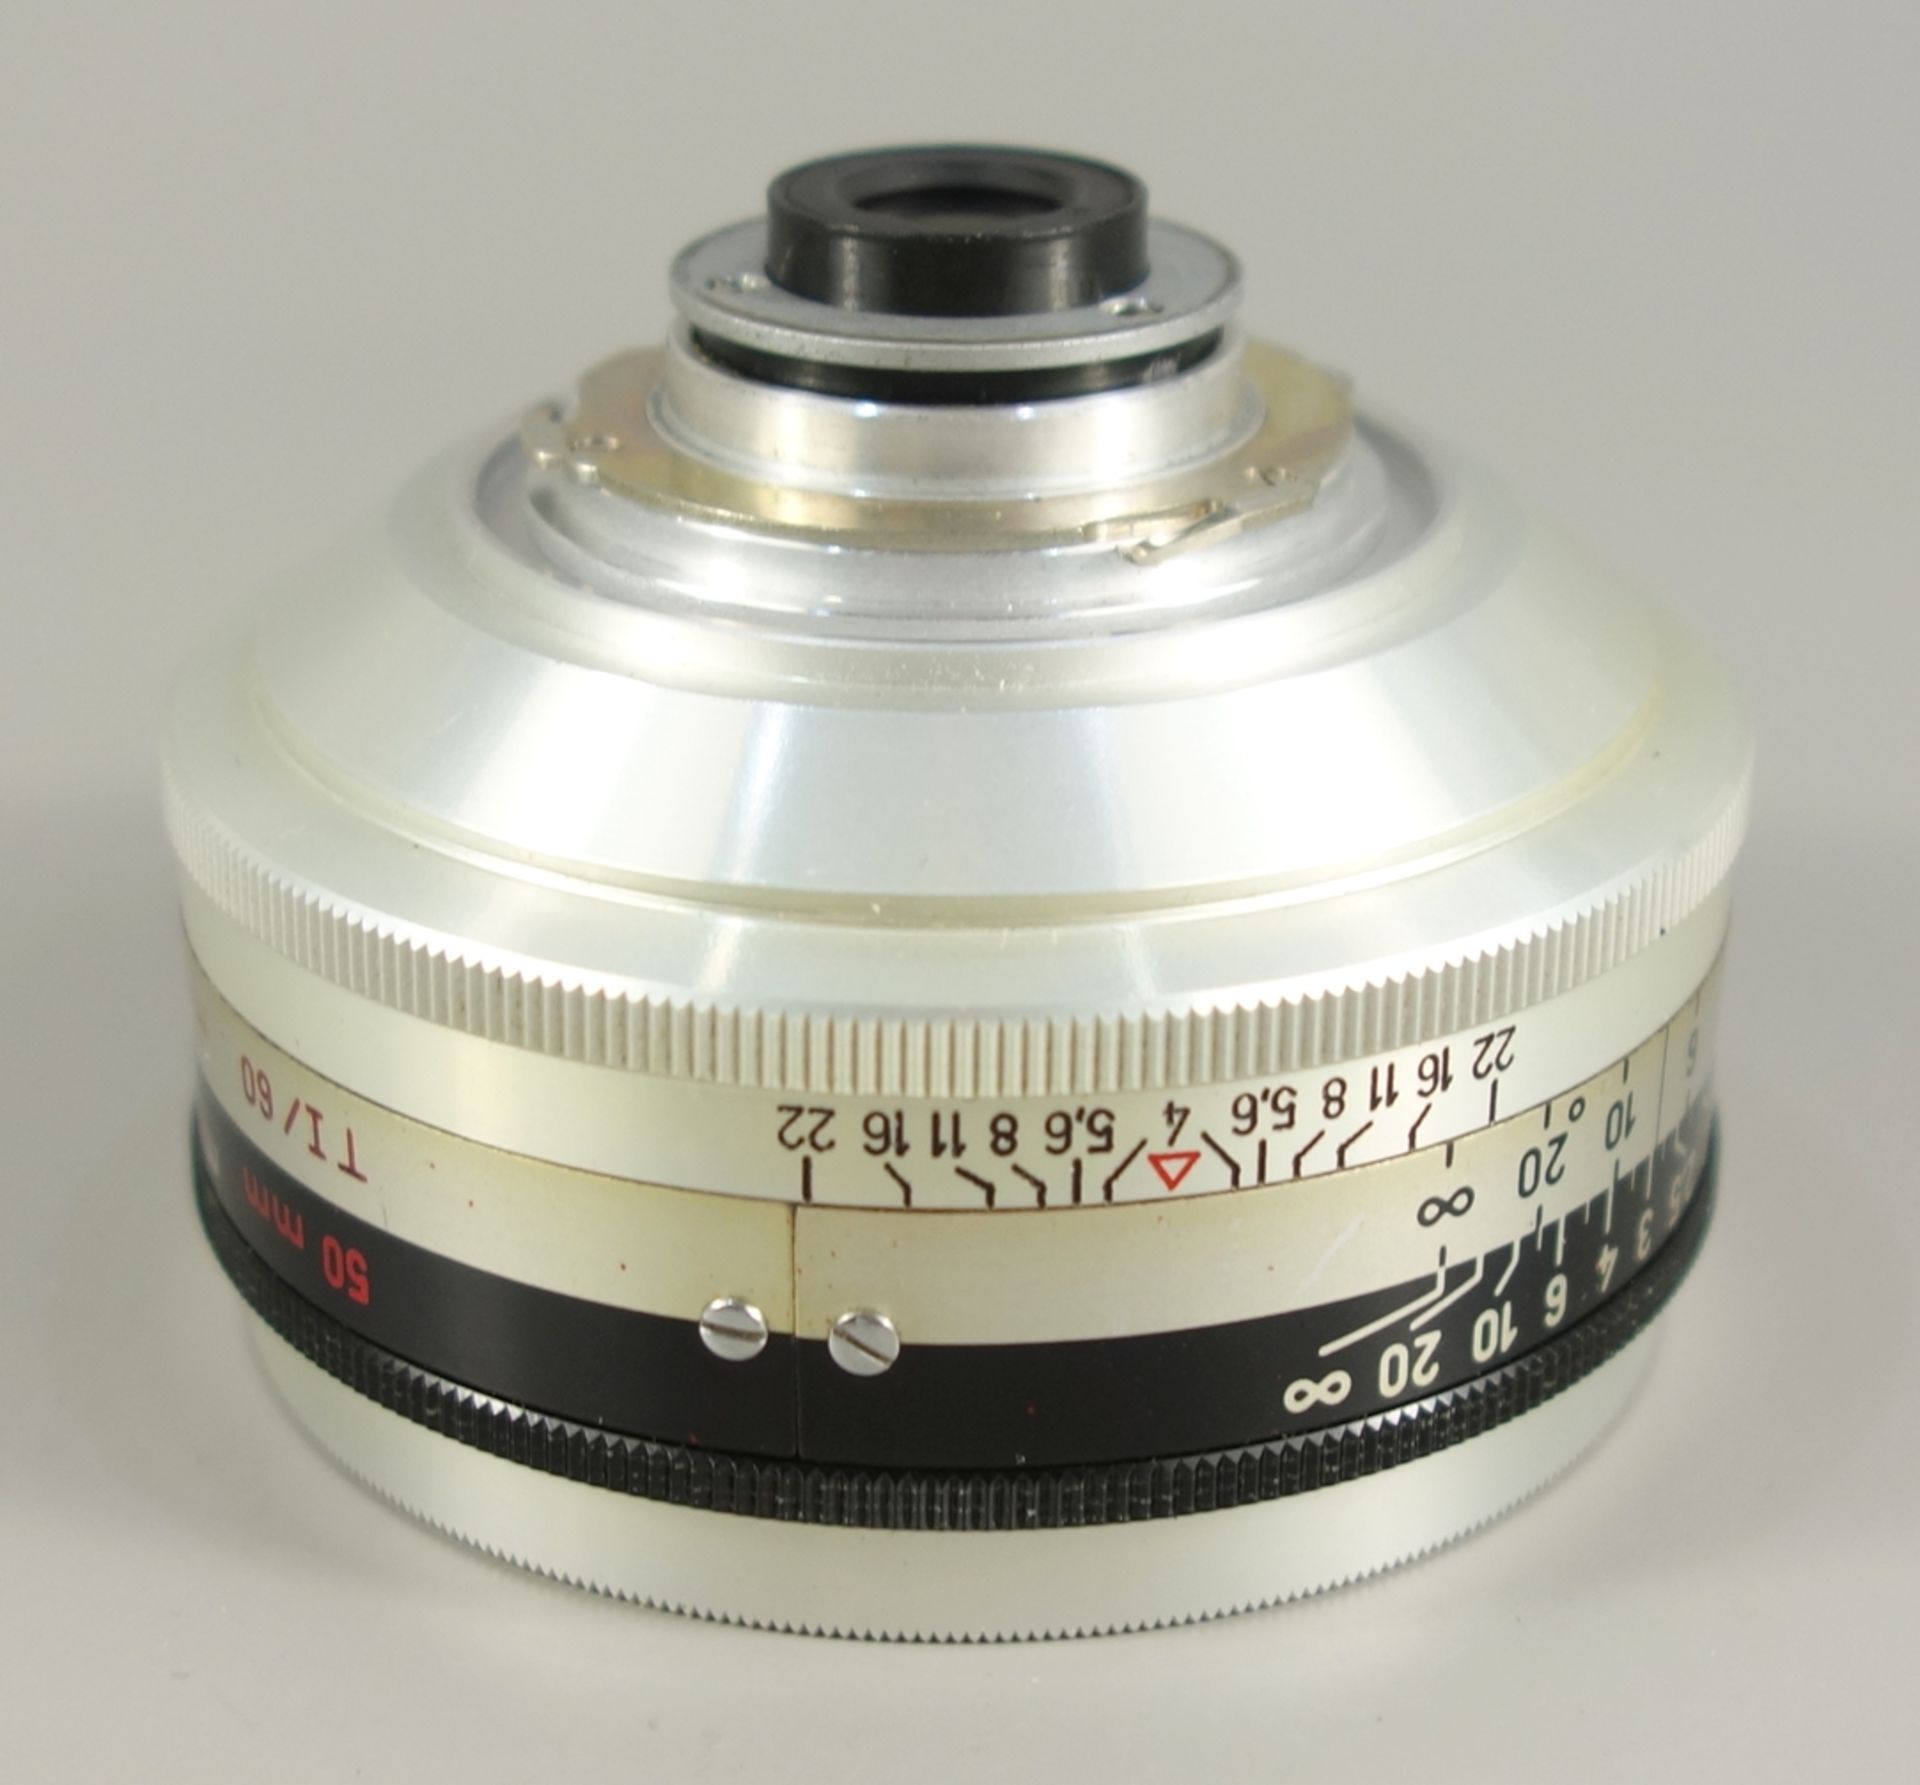 Tele-Objektiv für Kodak Retina, Schneider-Kreuznach Retina Longar-Xenon C 1:4/80 mm, 1954-60, - Image 4 of 4